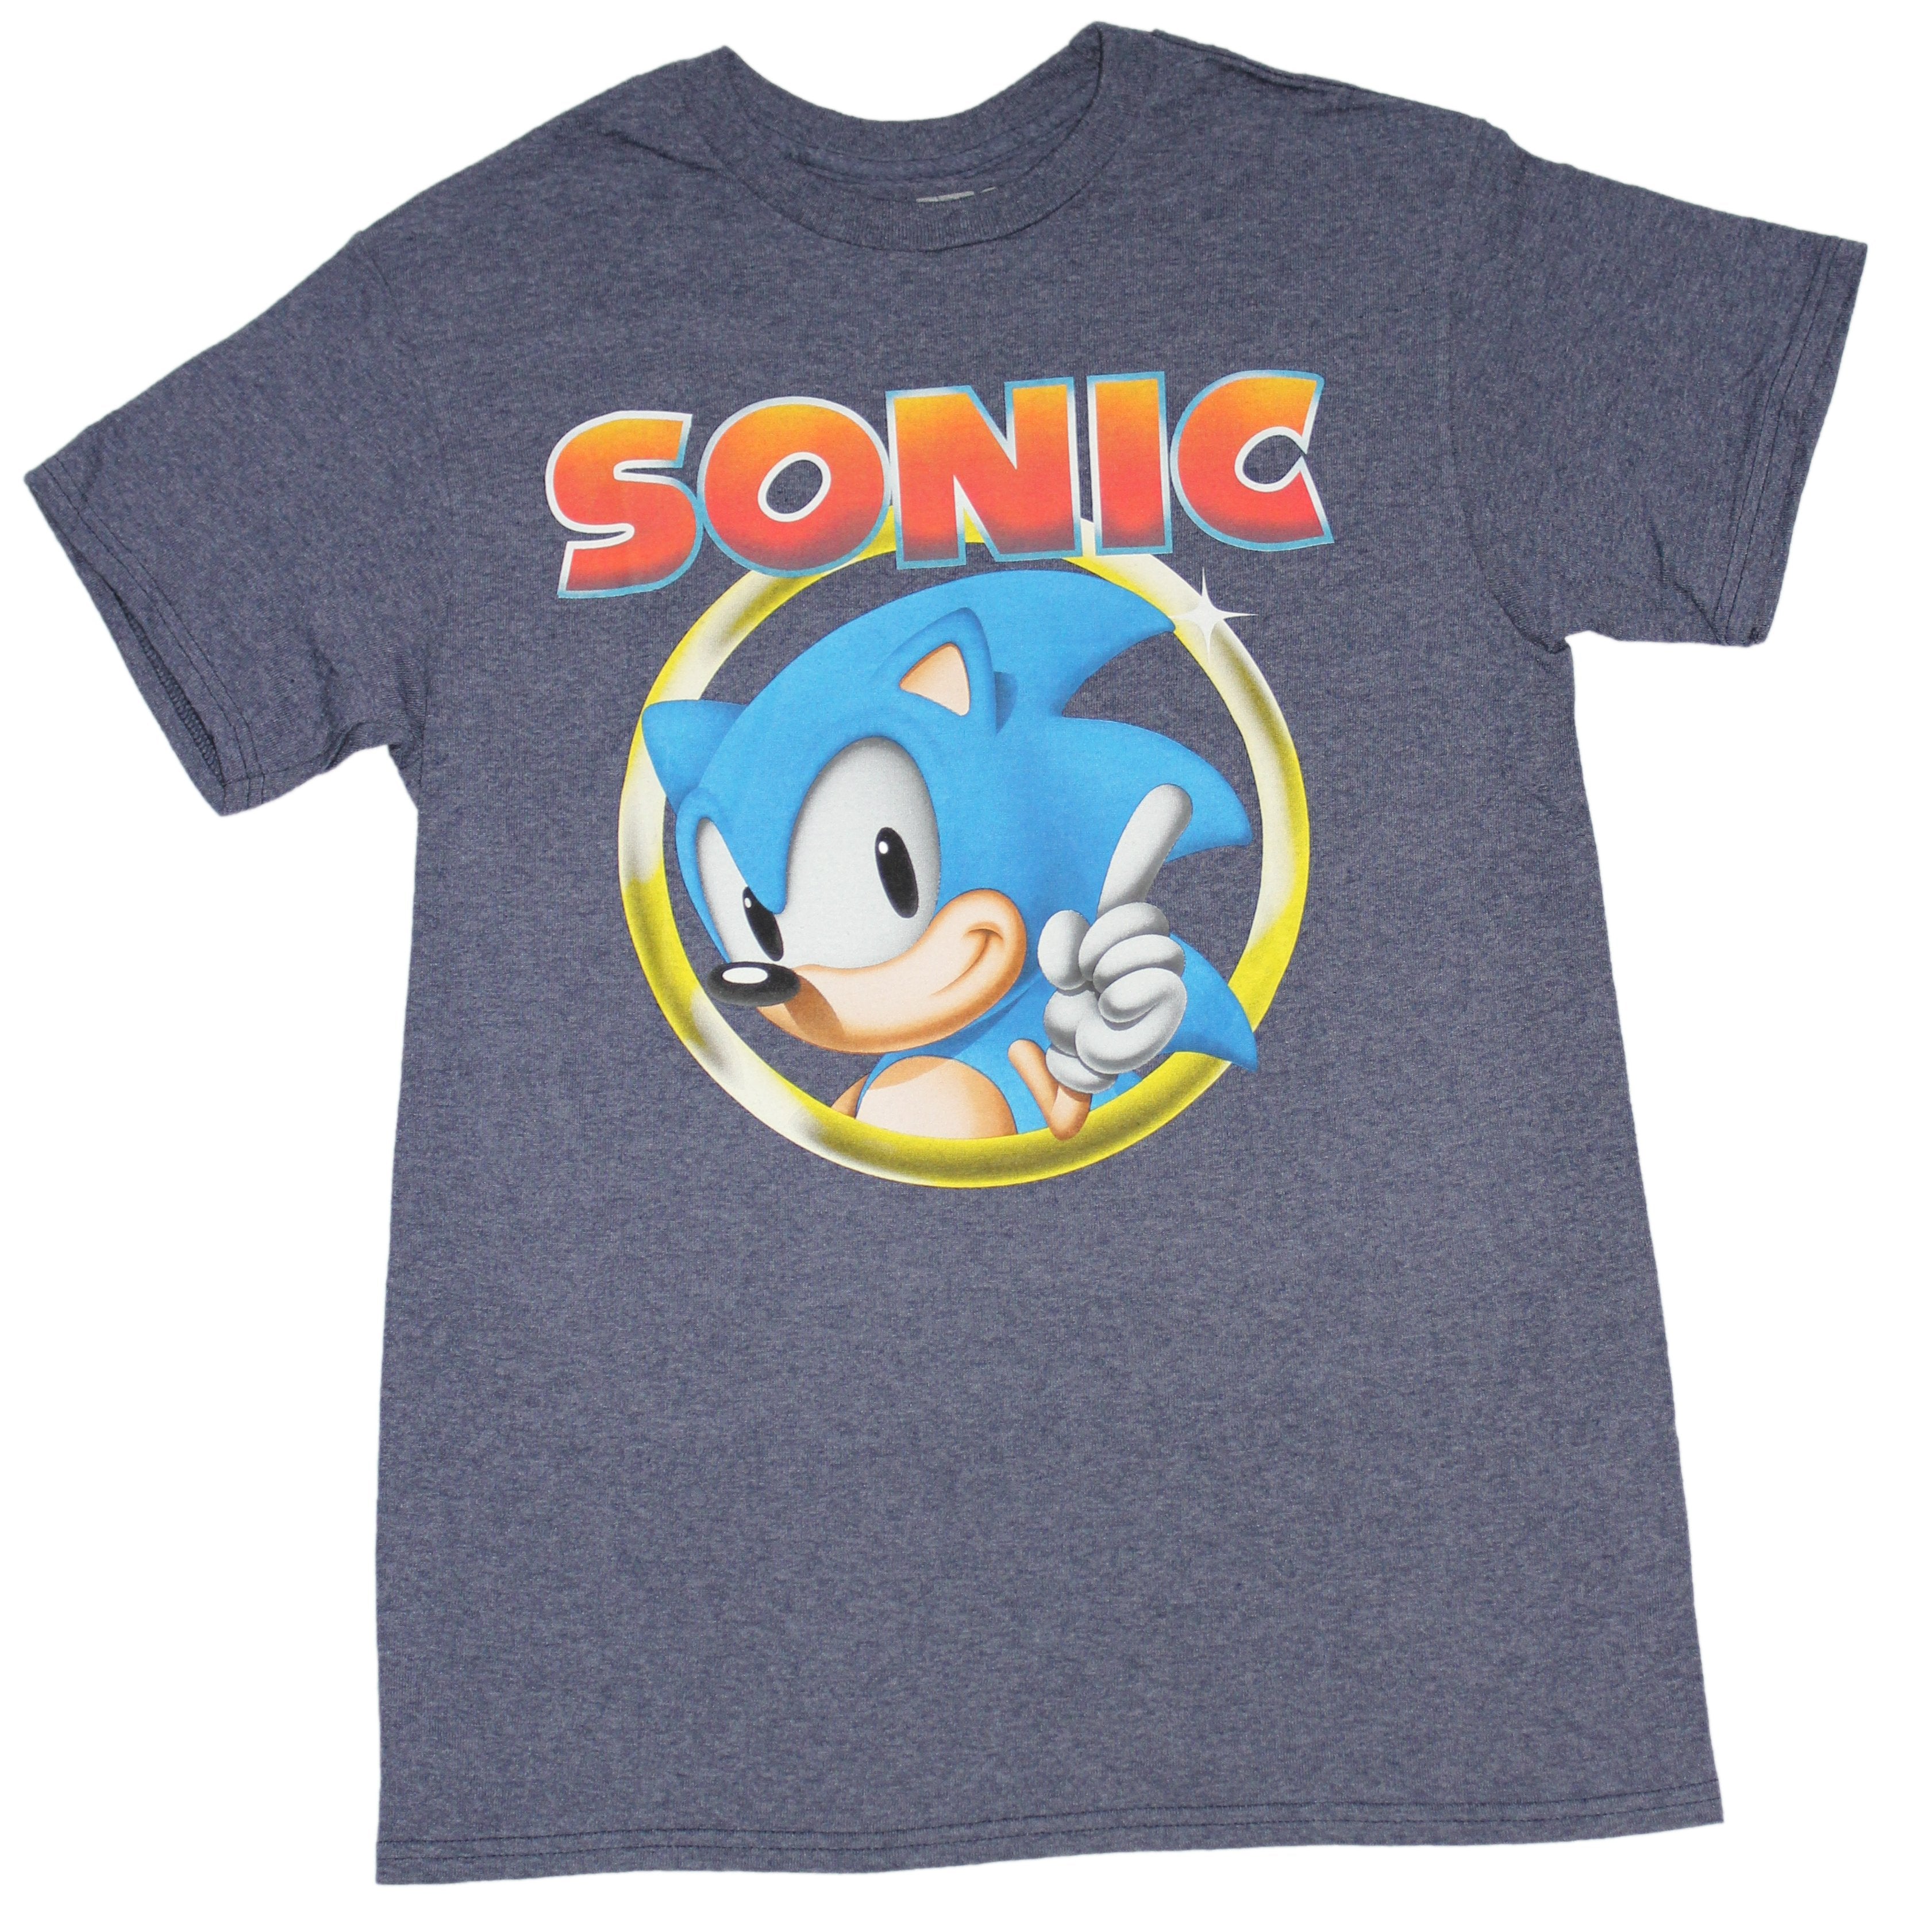 Sonic the Hedgehog Mens T-Shirt - Finger Pose in Ring